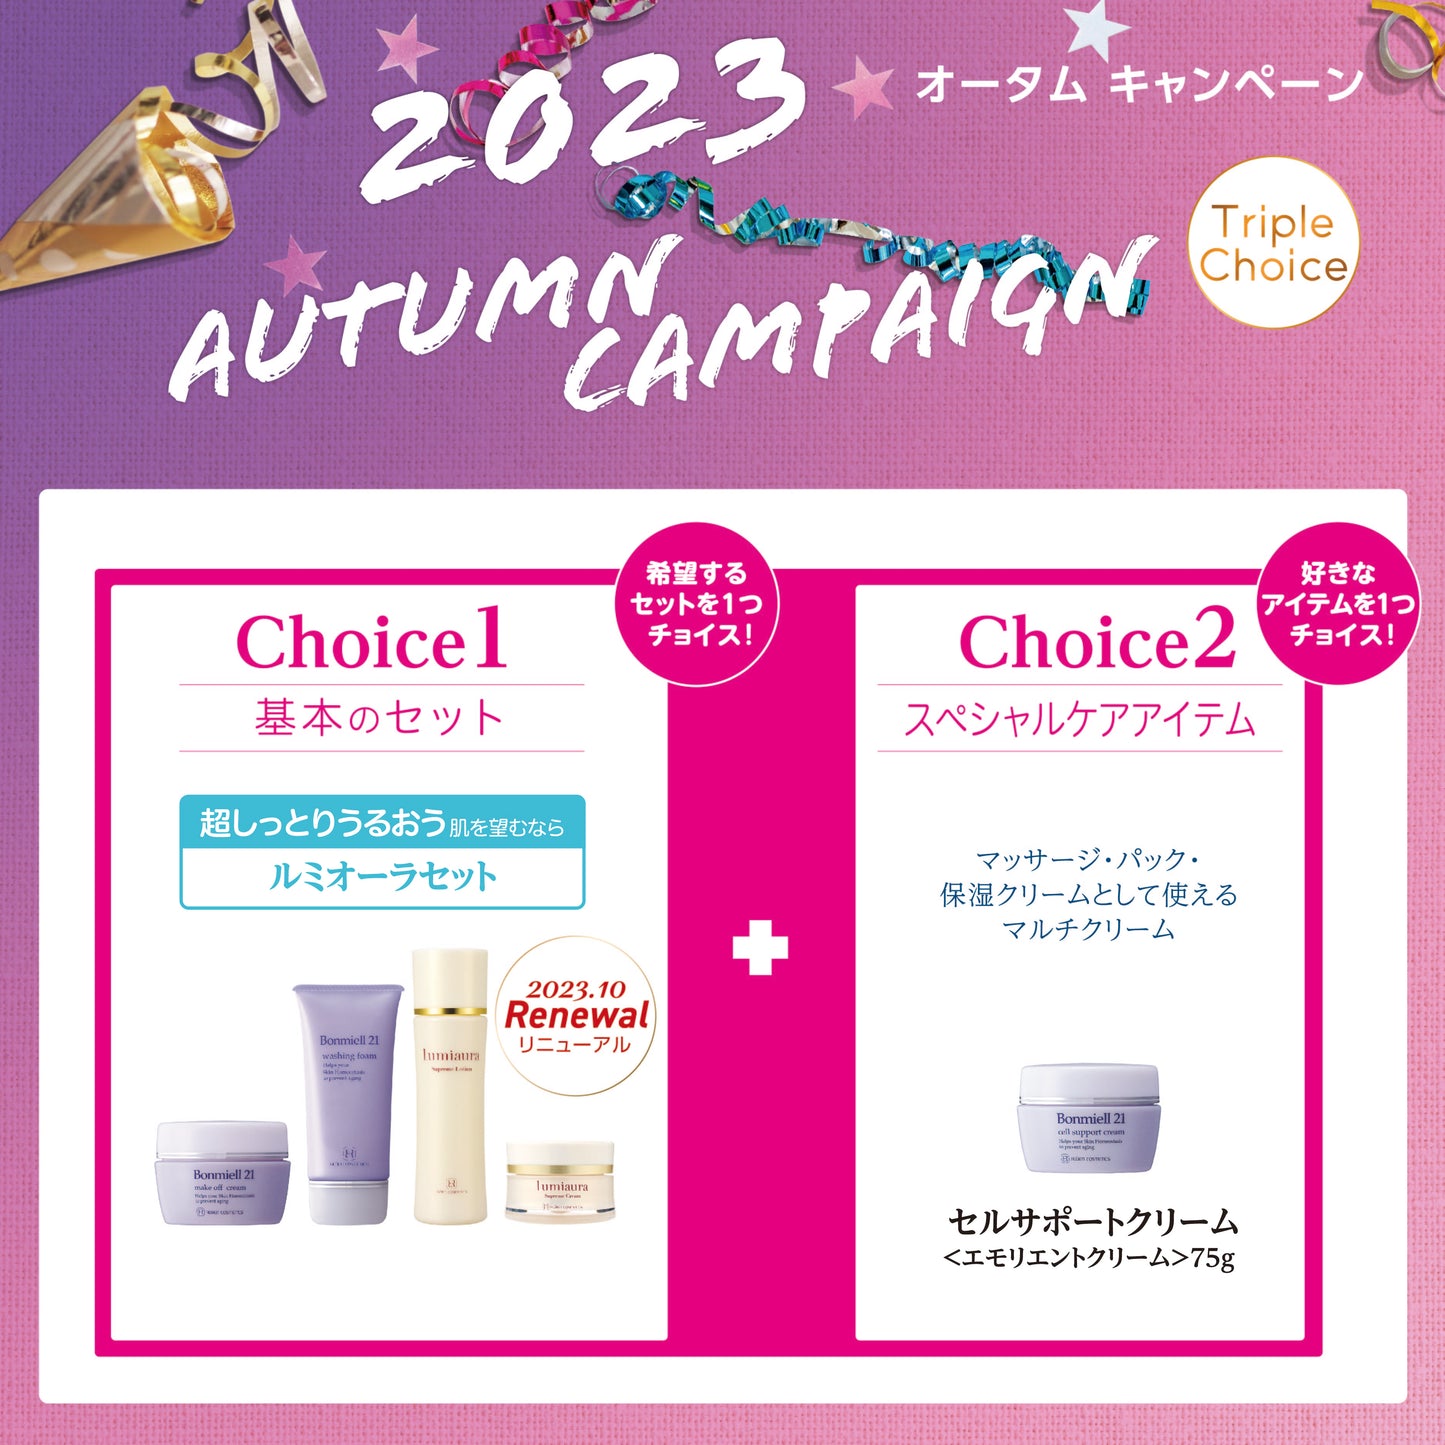 【New】2023 Autumn Campaign Lumiaura Set